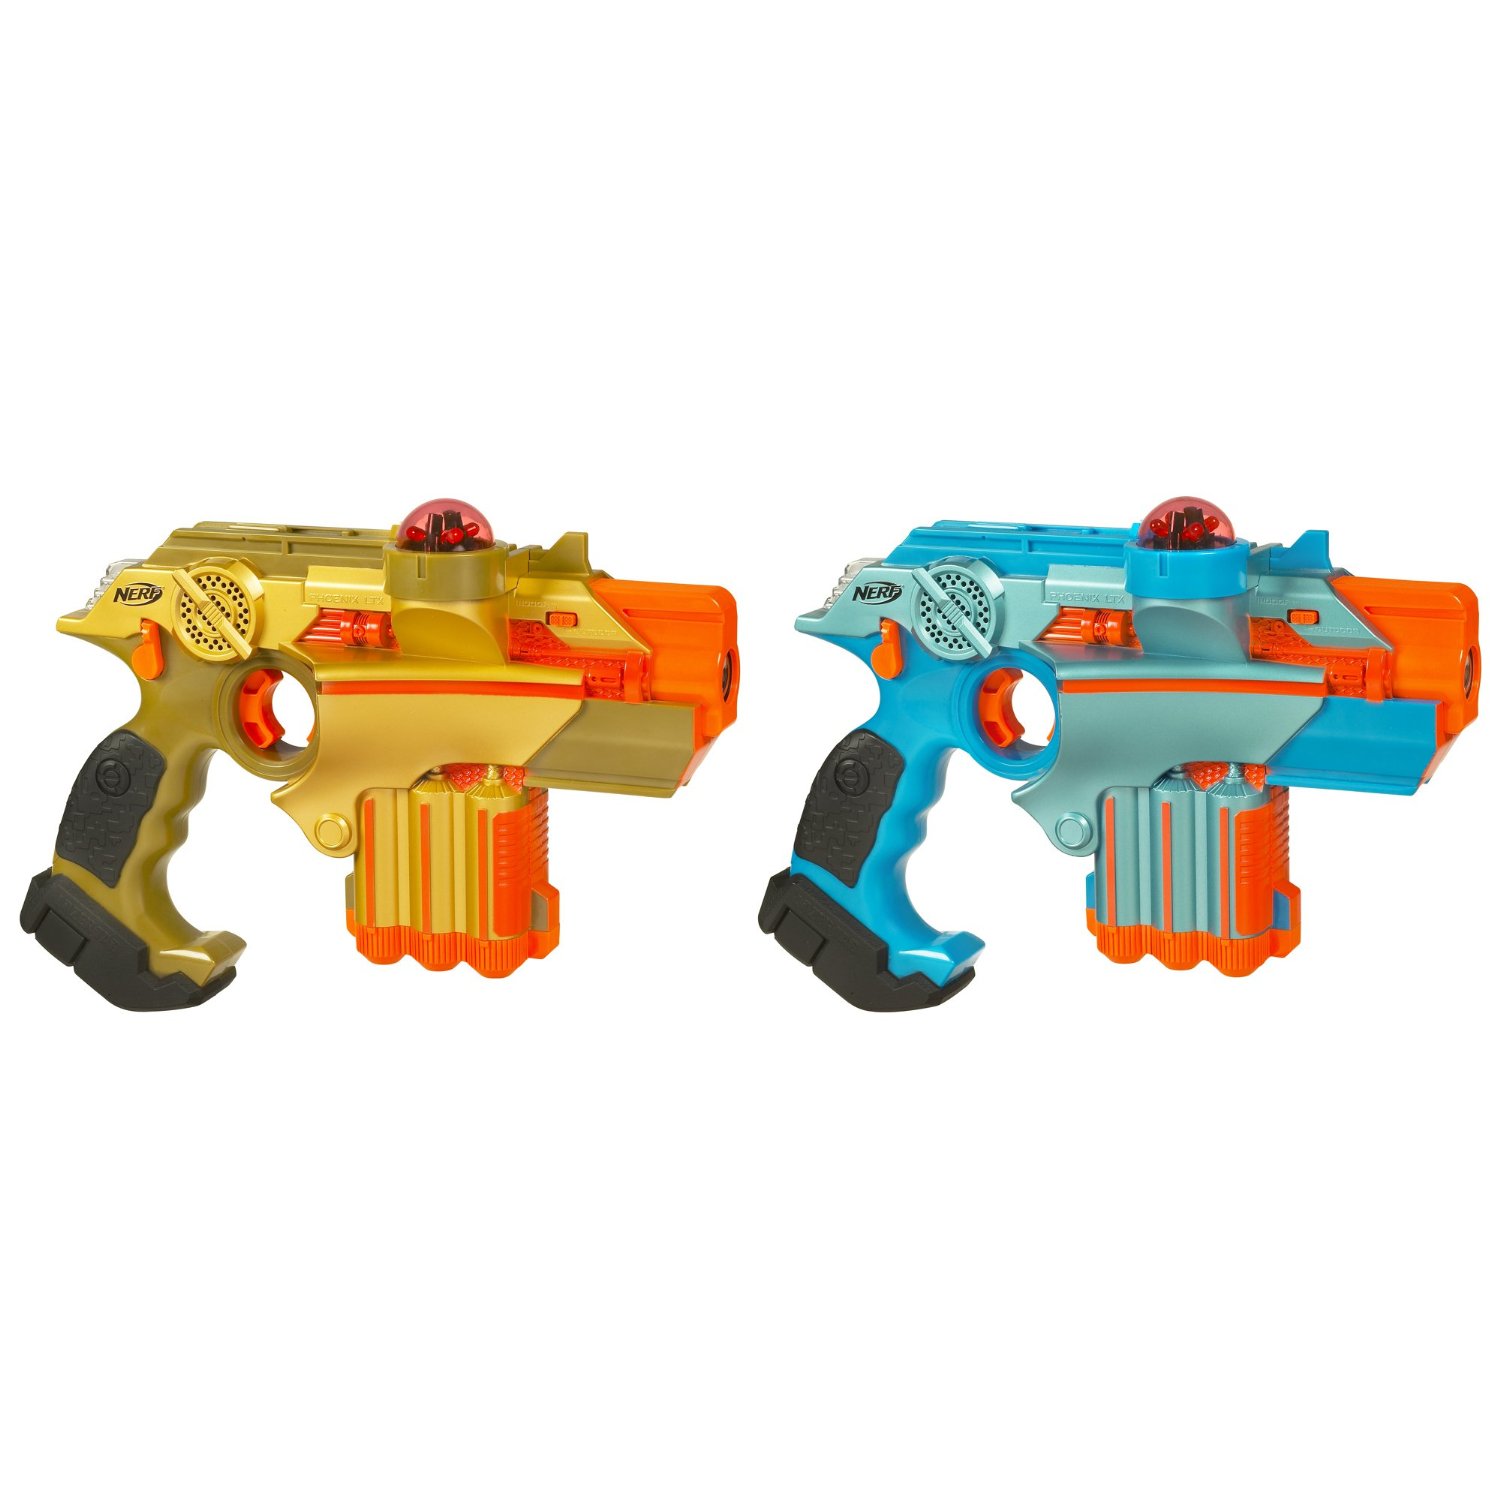 Amazon.com: Nerf Lazer Tag Phoenix LTX Tagger 2-Pack: Toys & Games